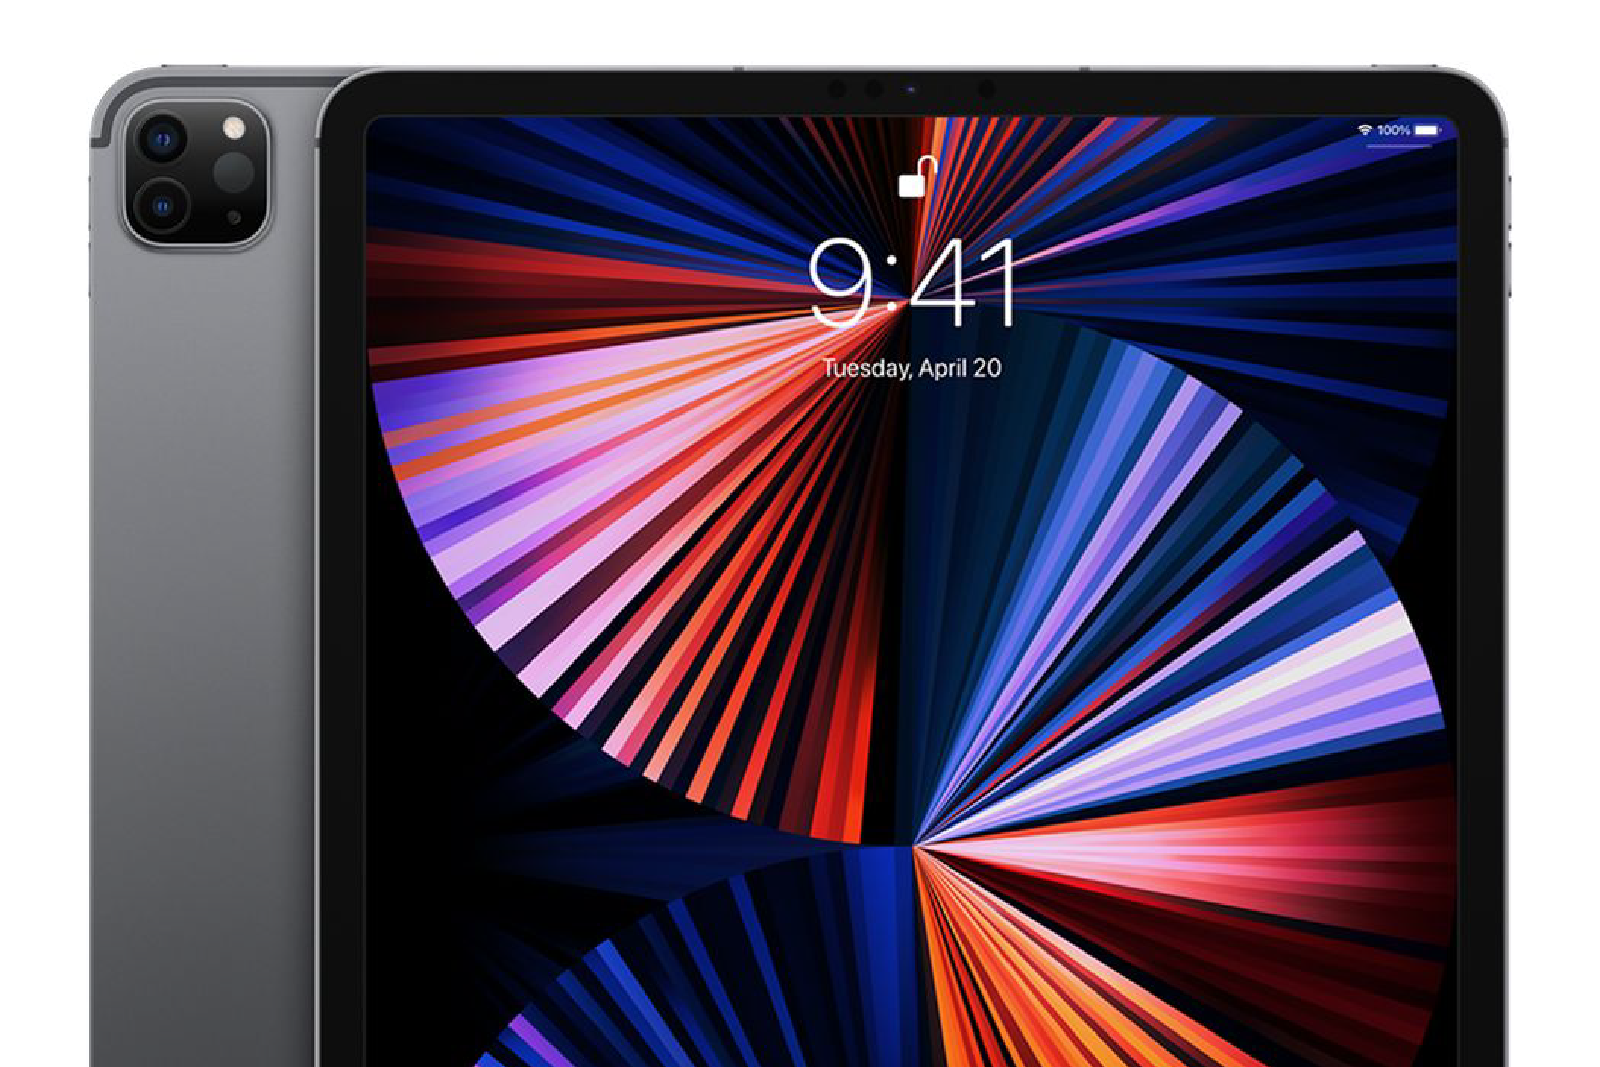 Mini-LED iPad Pro is official: 5G, powerful M1 chip, familiar design, Thunderbolt port